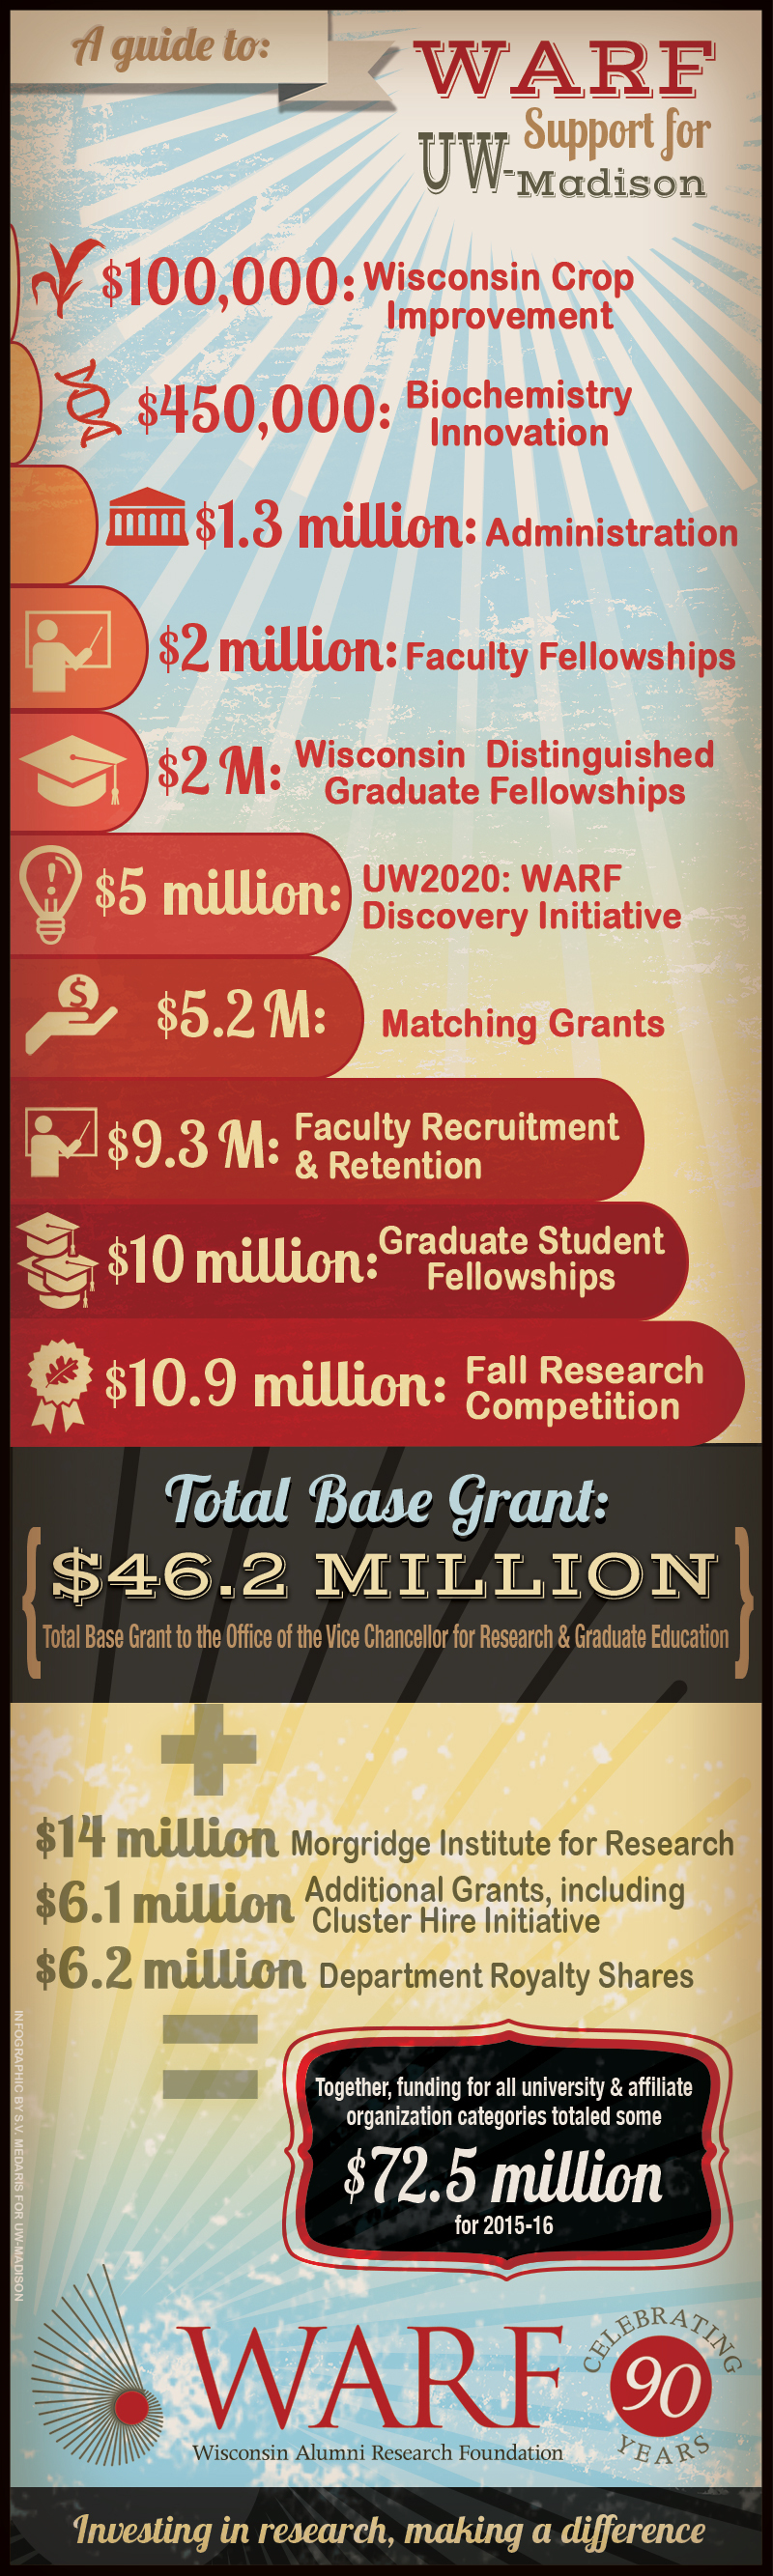 Illustration: Infographic of WARF grants